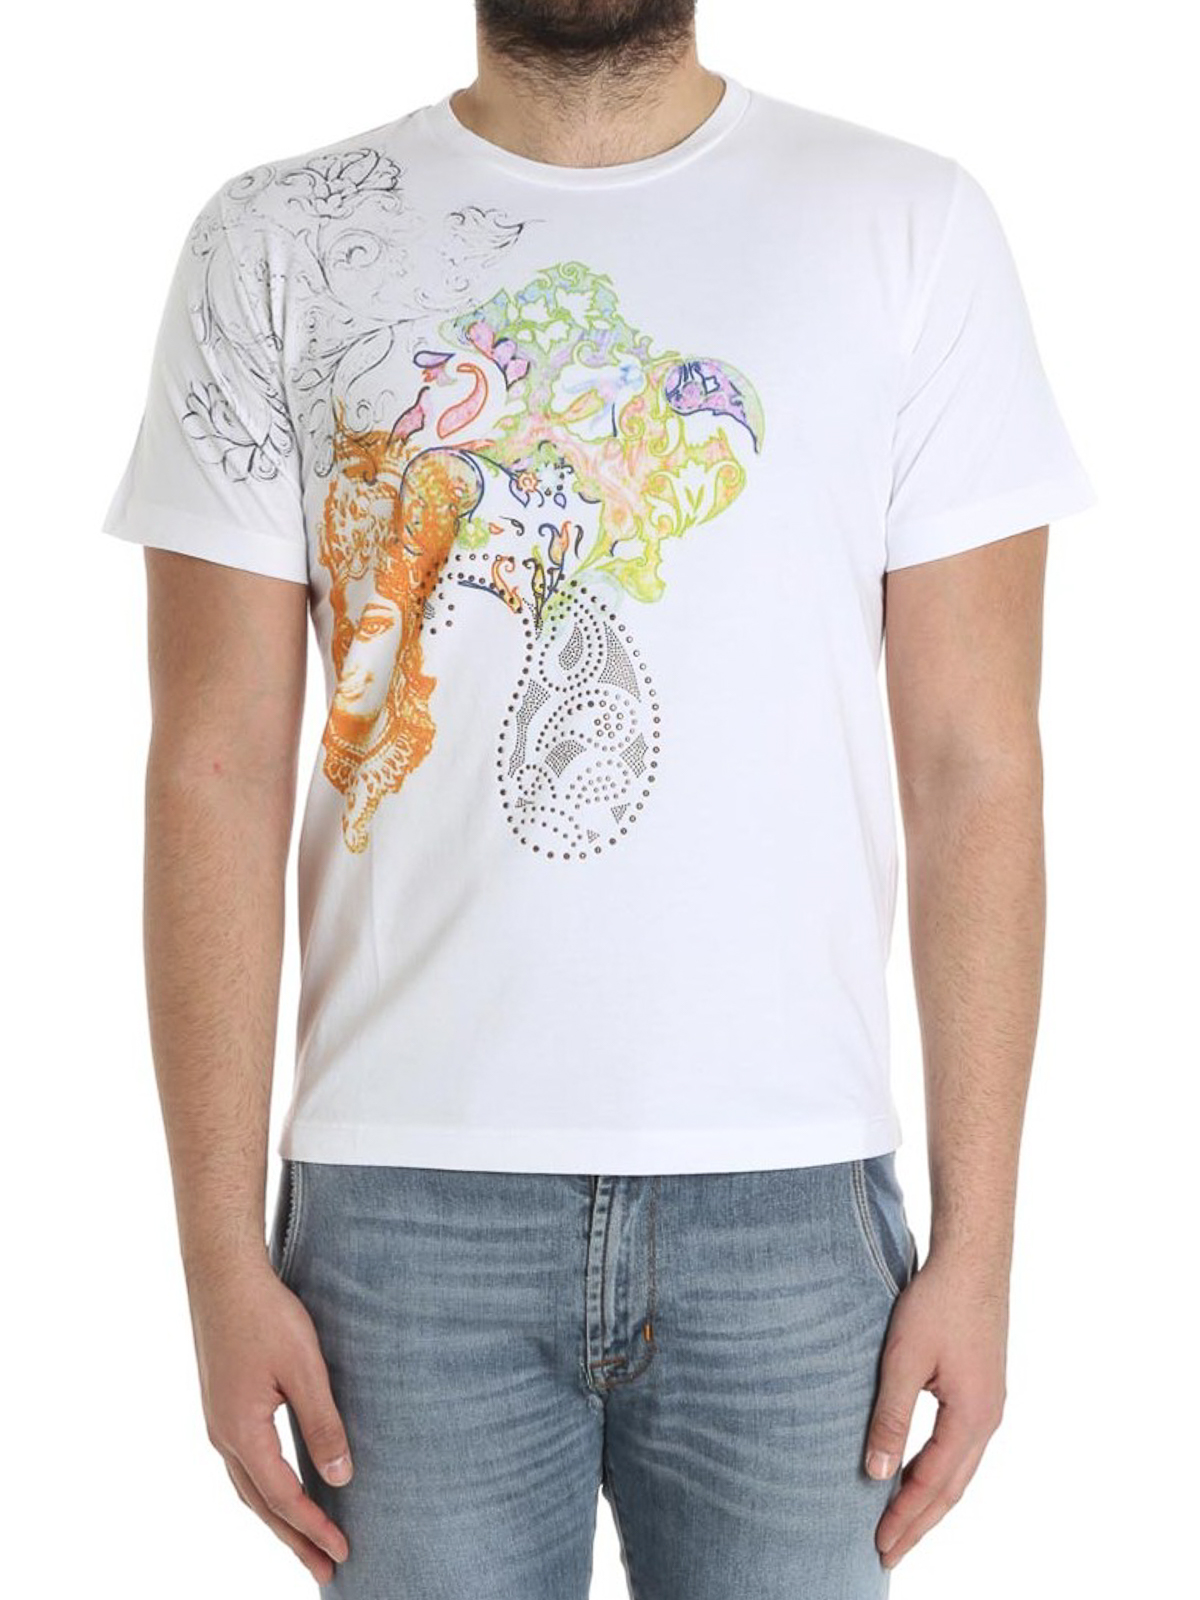 Tシャツ Etro - Tシャツ - 白 - 1Y0209185990 | iKRIX shop online